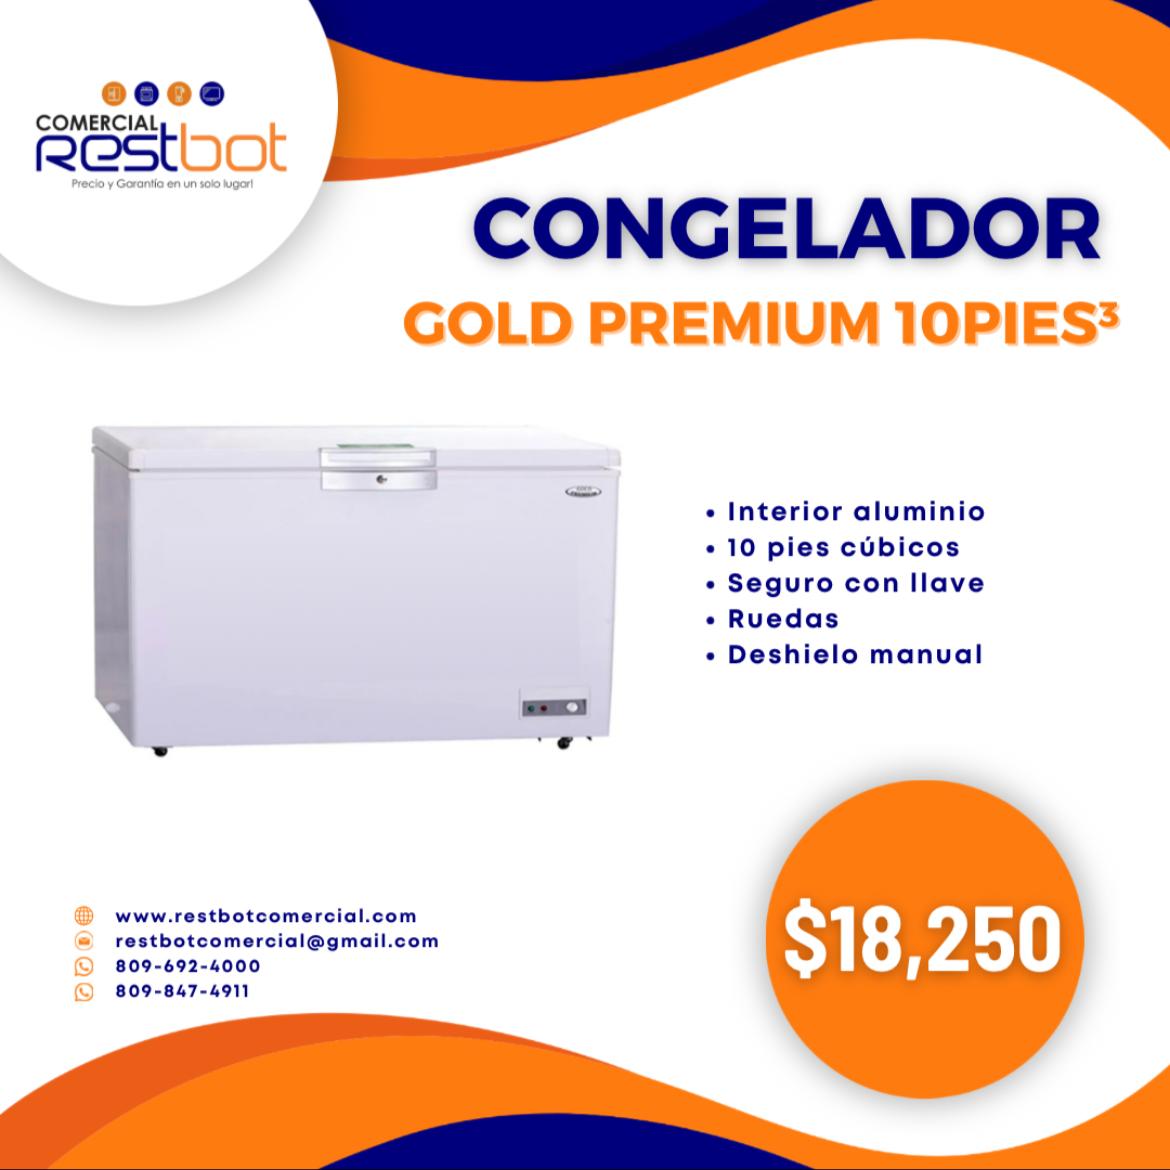 Congelador Gold premiu Foto 7185676-1.jpg